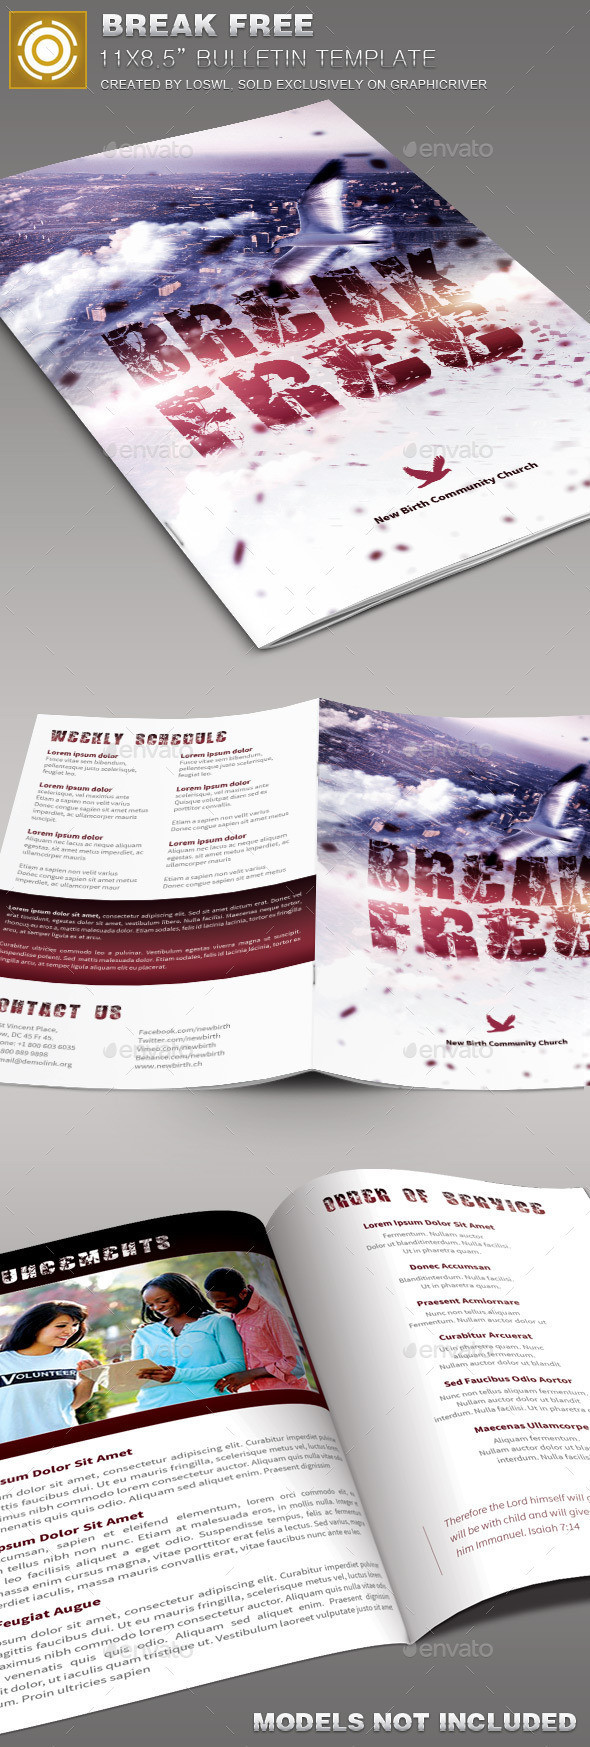 Break free church bulletin template image preview 1